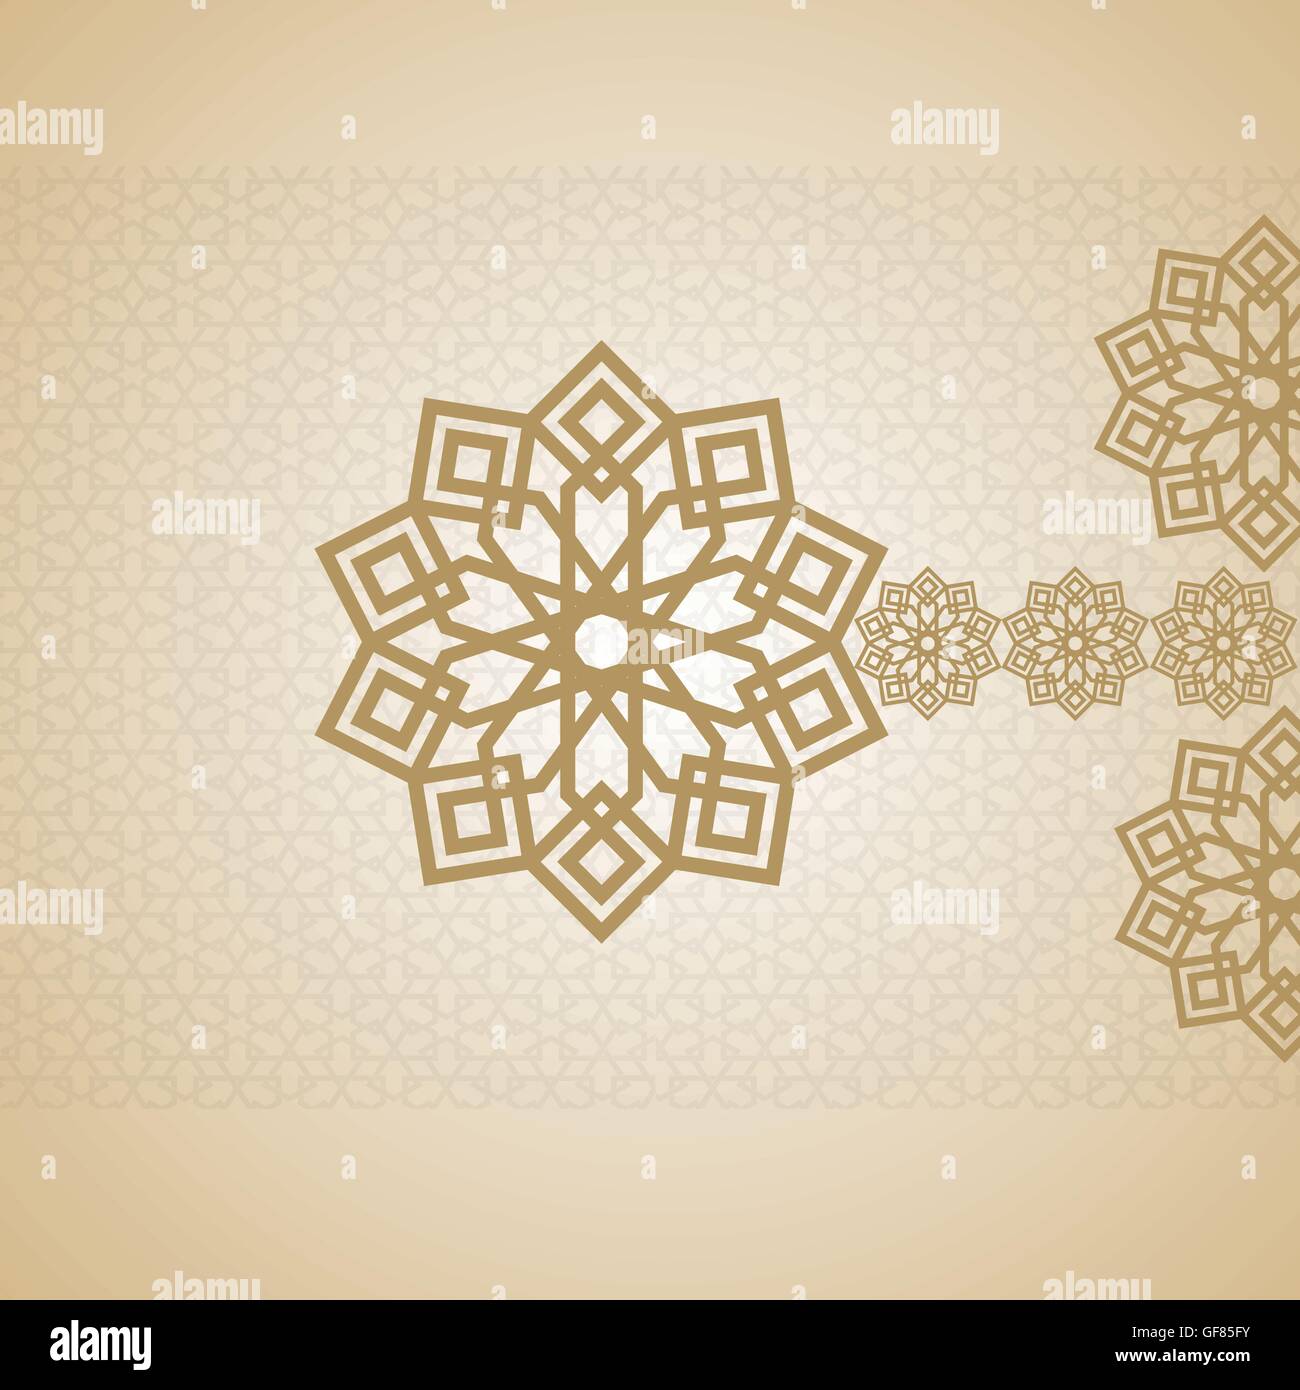 Arabische Islamische Kalligraphie Vektoren Grußkarte EID Mubarak Arabisch Kartendesign Stock Vektor